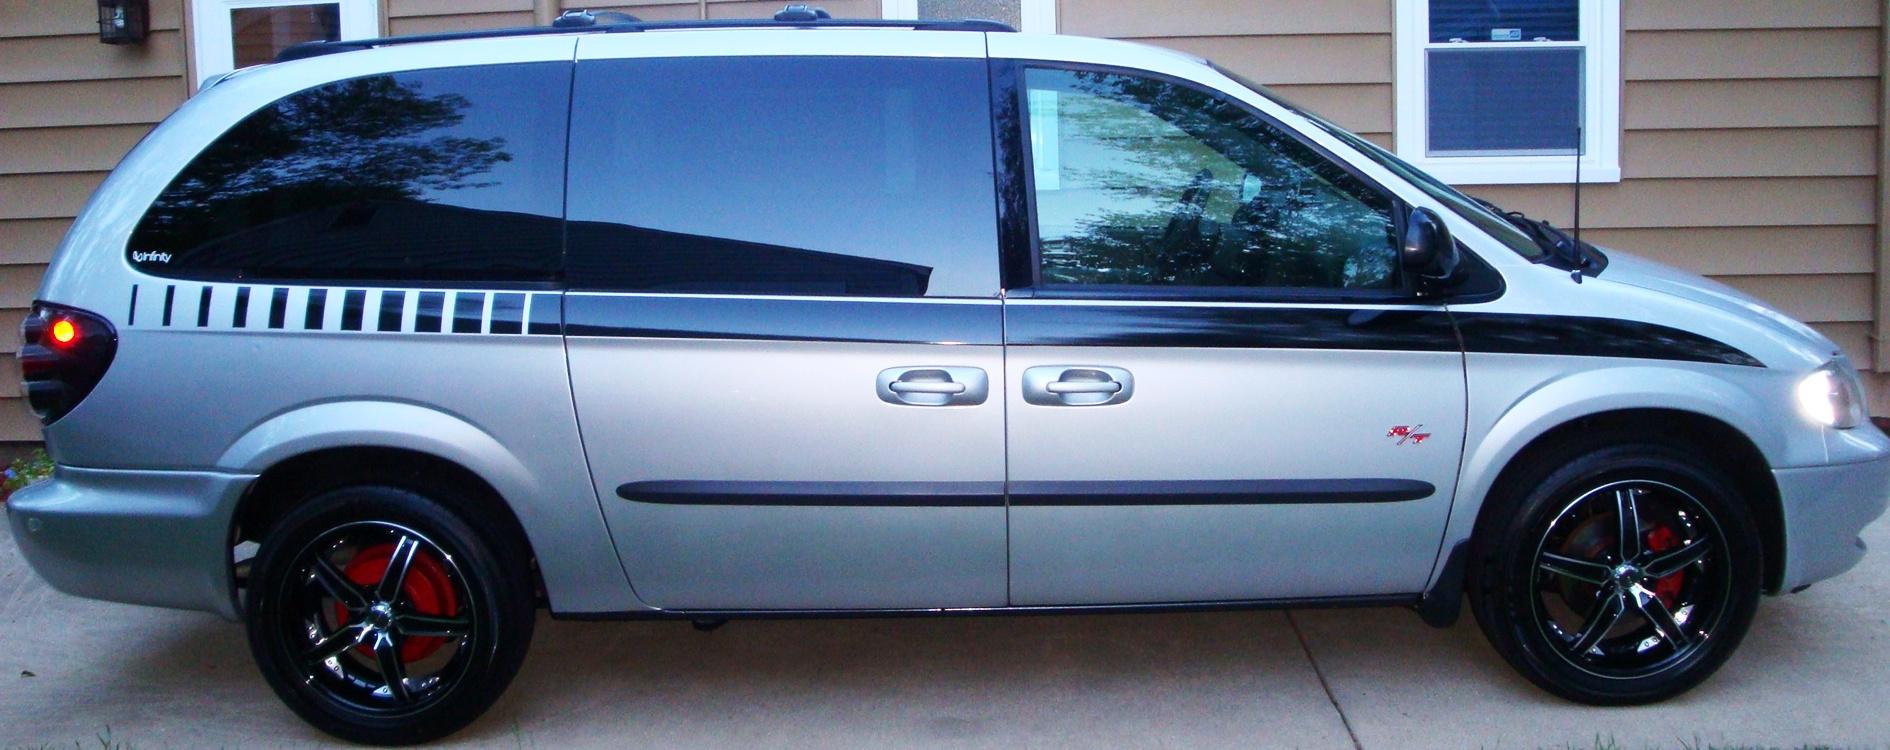 Dodge Grand Caravan 2003 #8